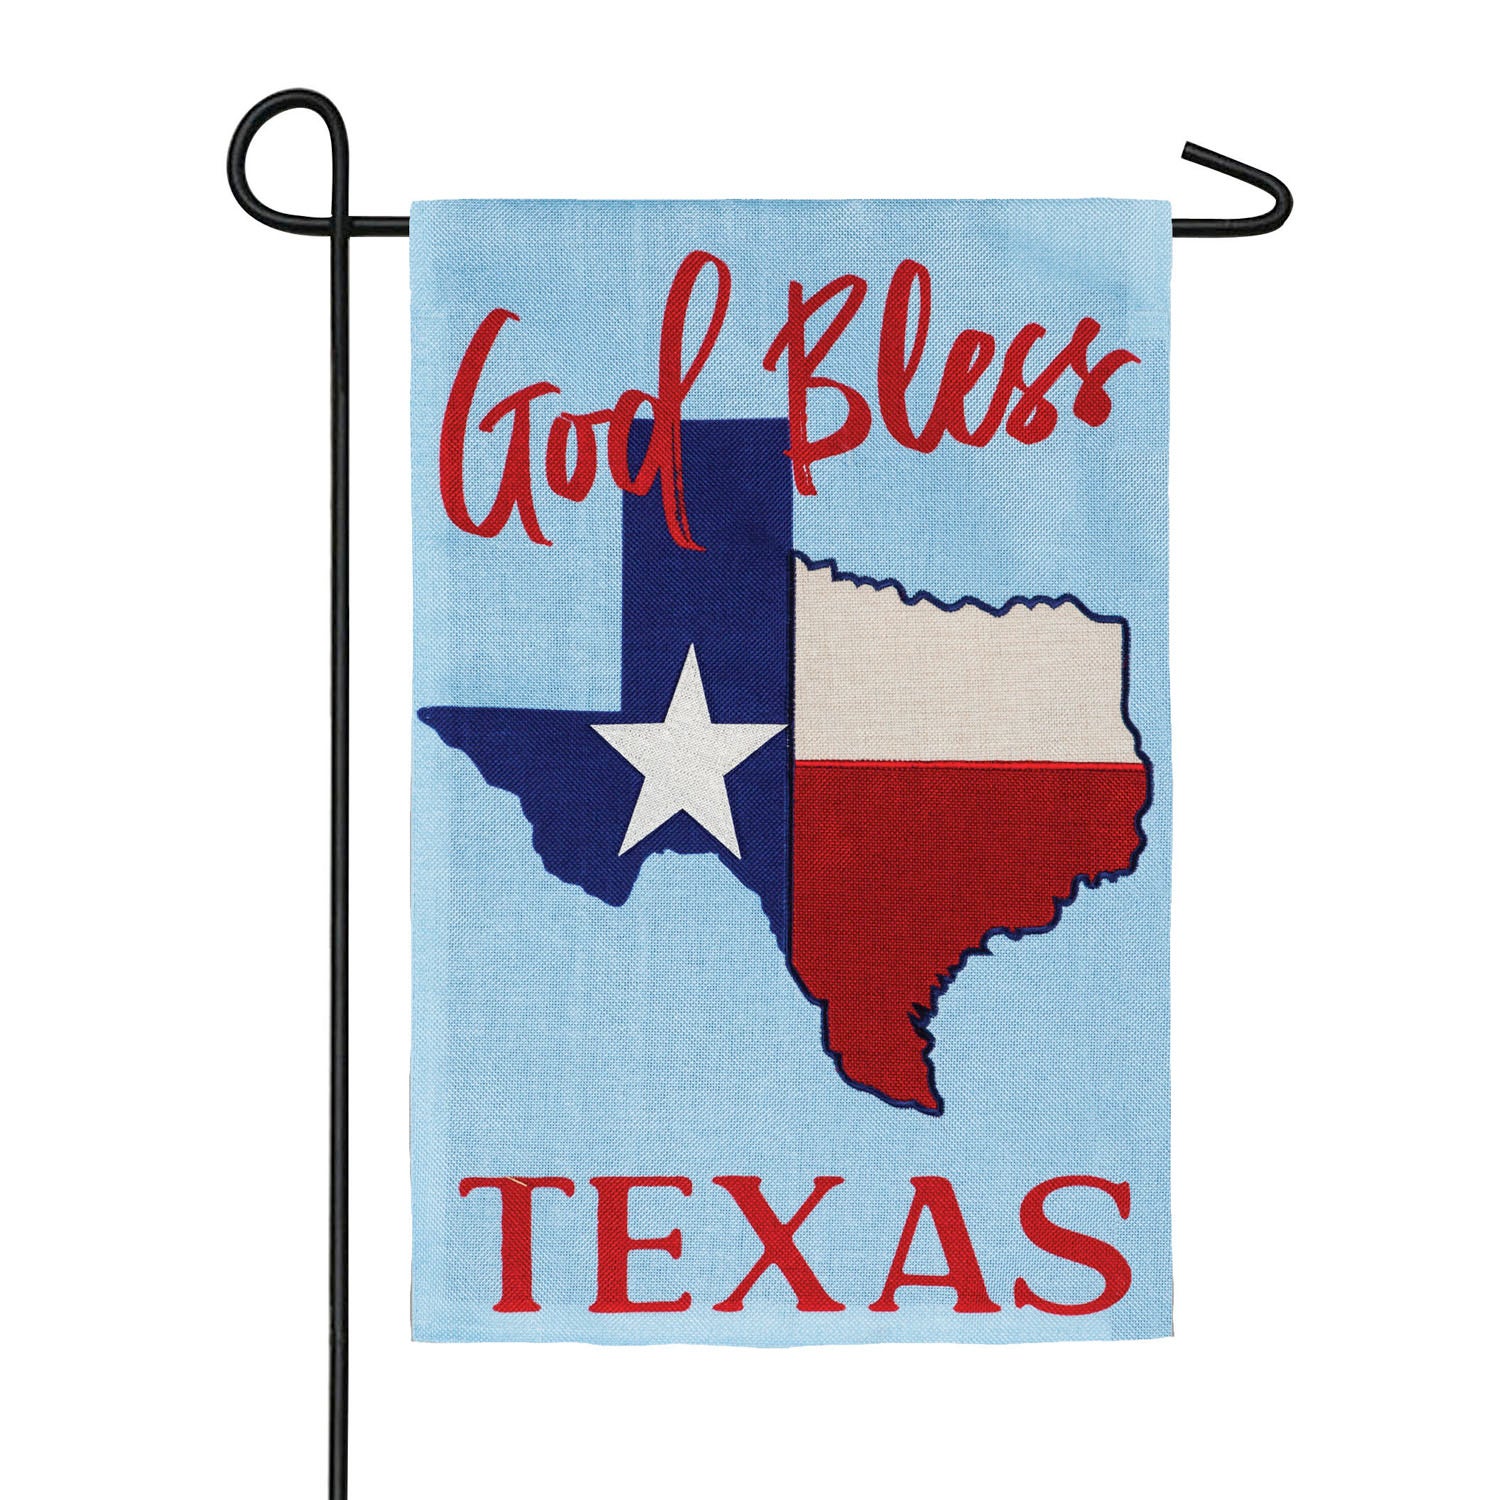 God Bless Texas Burlap Garden Flag